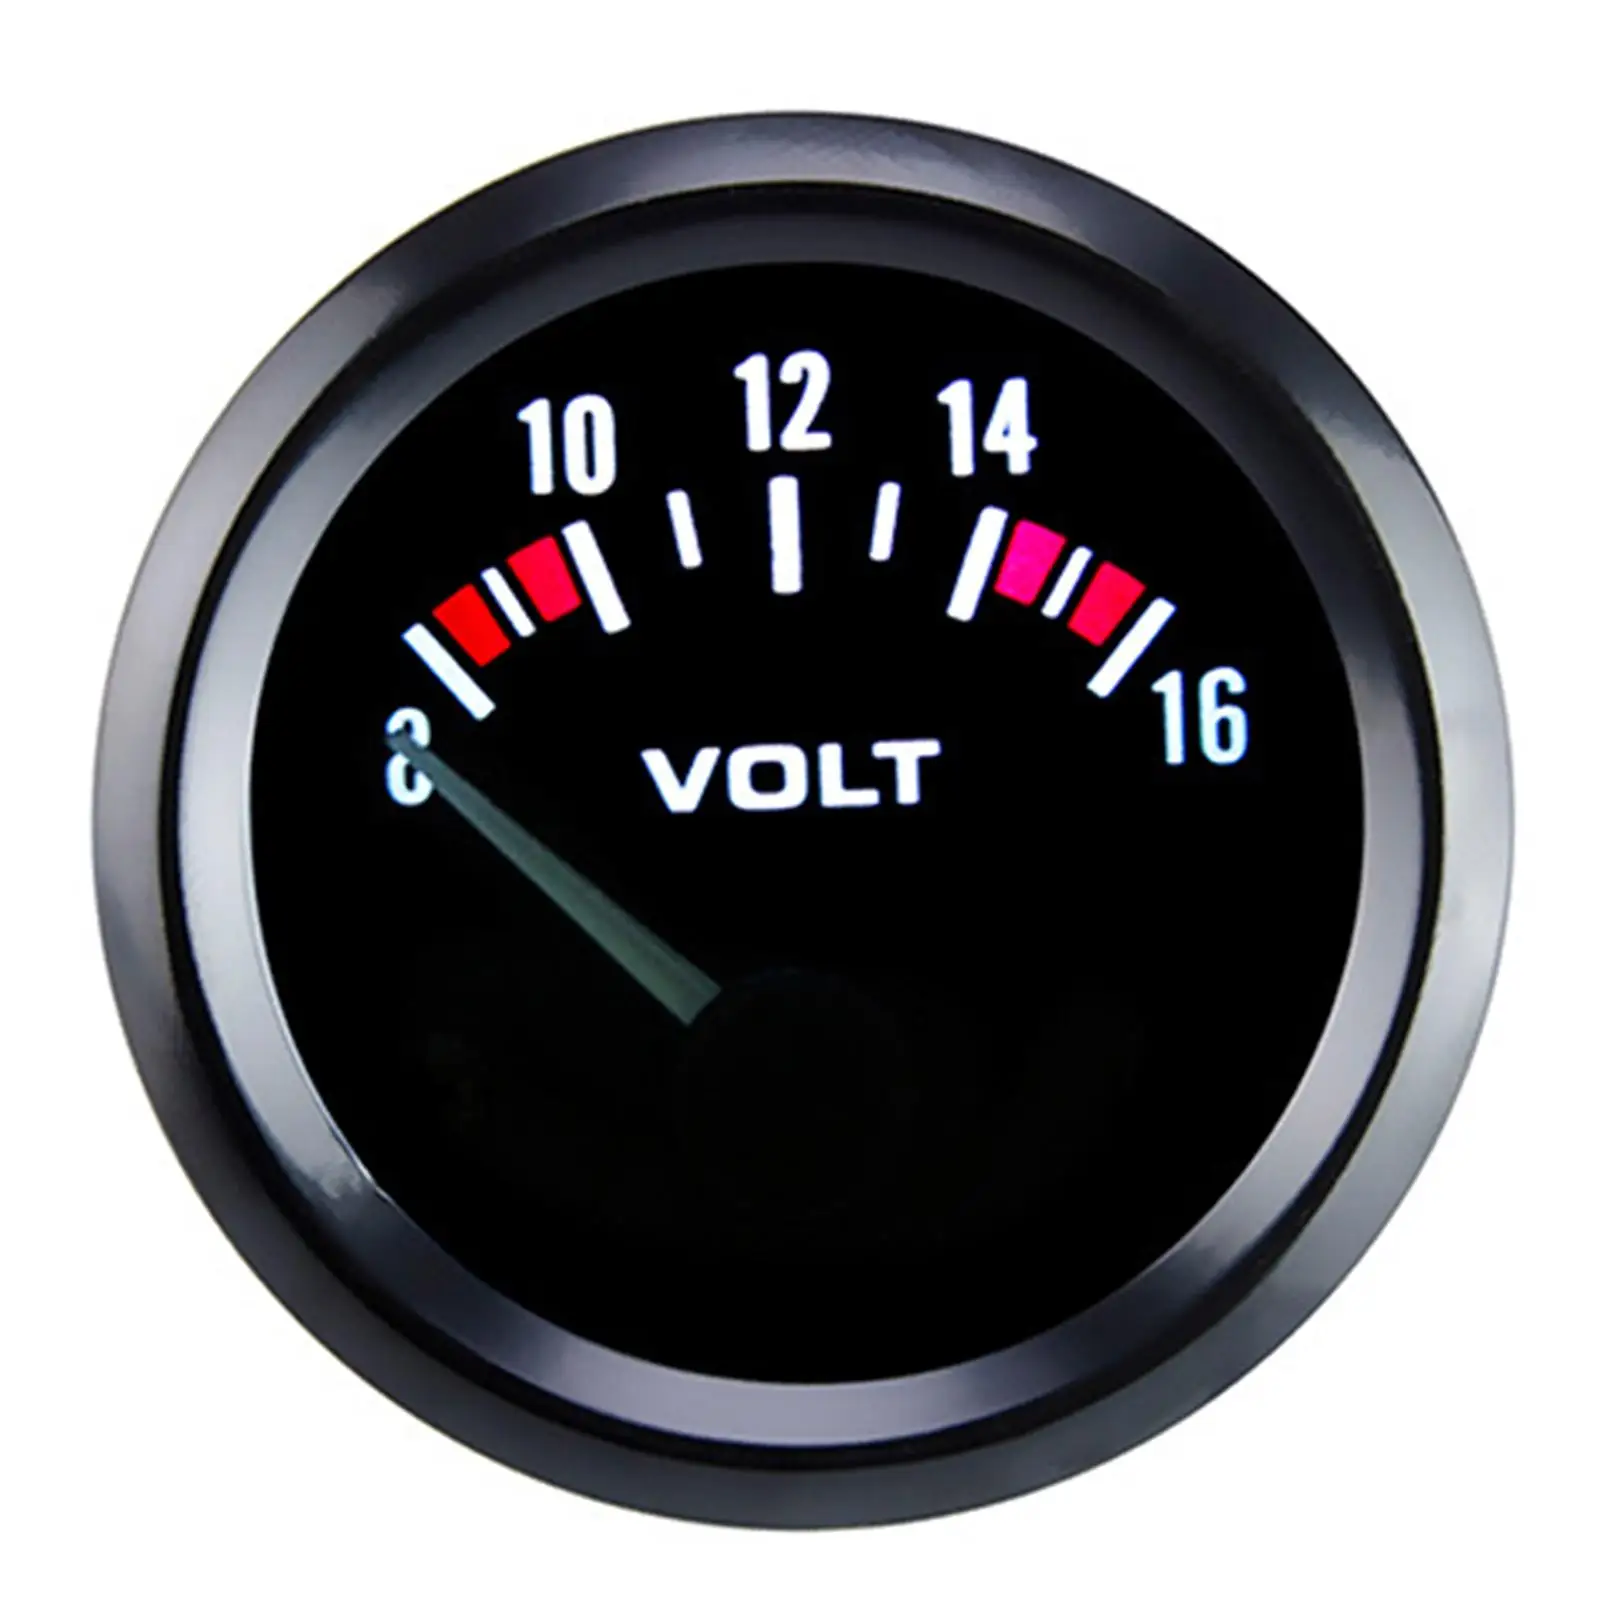 Car Voltmeter Premium Meter Gauge Voltmeter for Bicycle Car Motorcycle